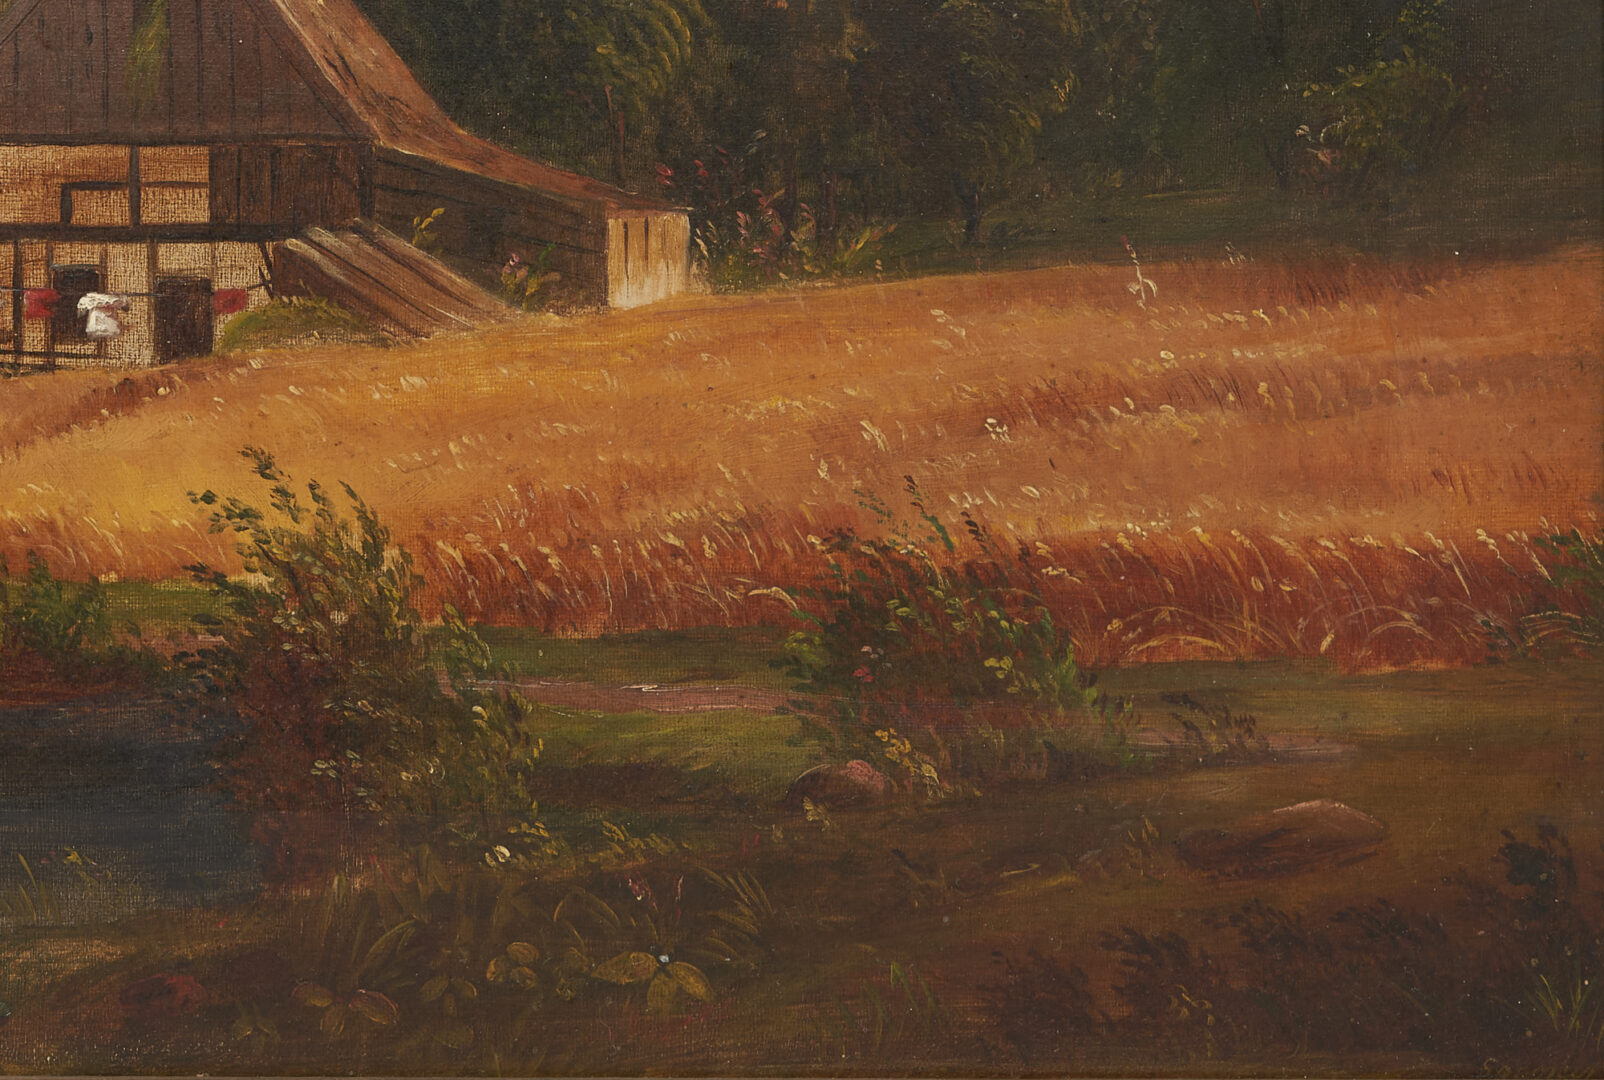 Lot 700: Attr. Job Spencer O/C Landscape Painting, Shenandoah Valley, Circa 1865